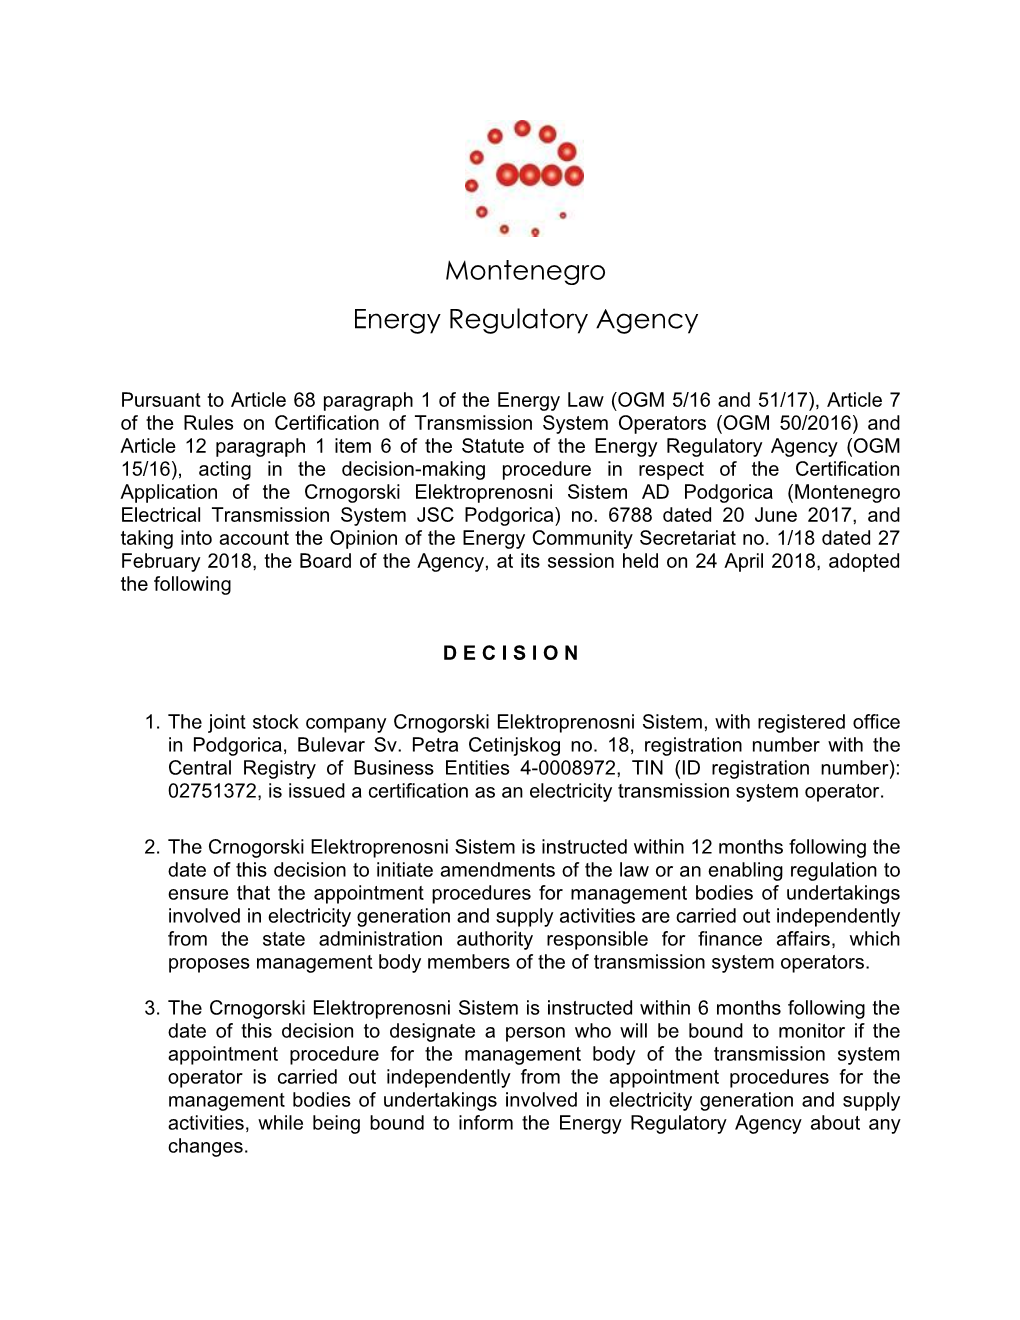 Montenegro Energy Regulatory Agency